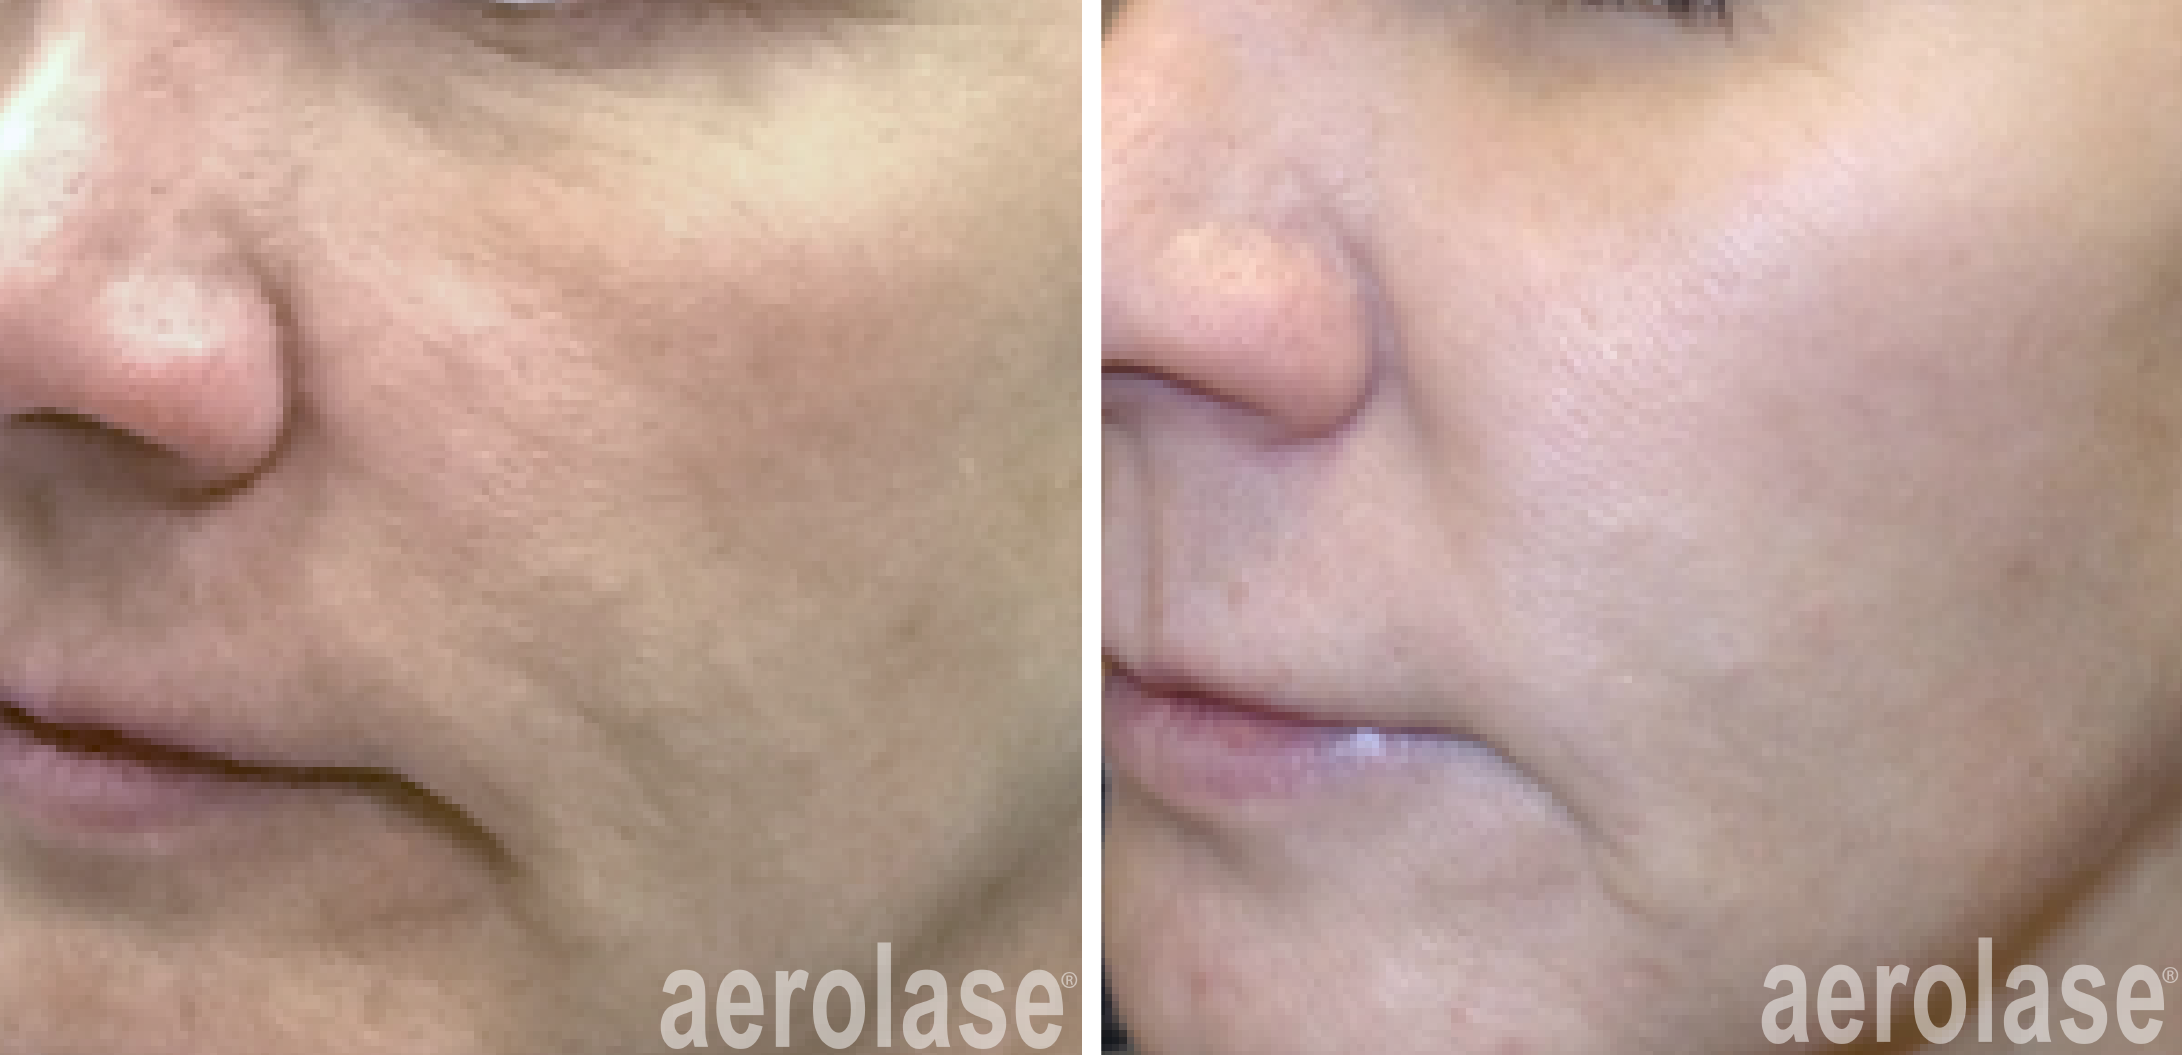 aerolase-skin-rejuvenation-before-after-kevin-pinski-4-treatments